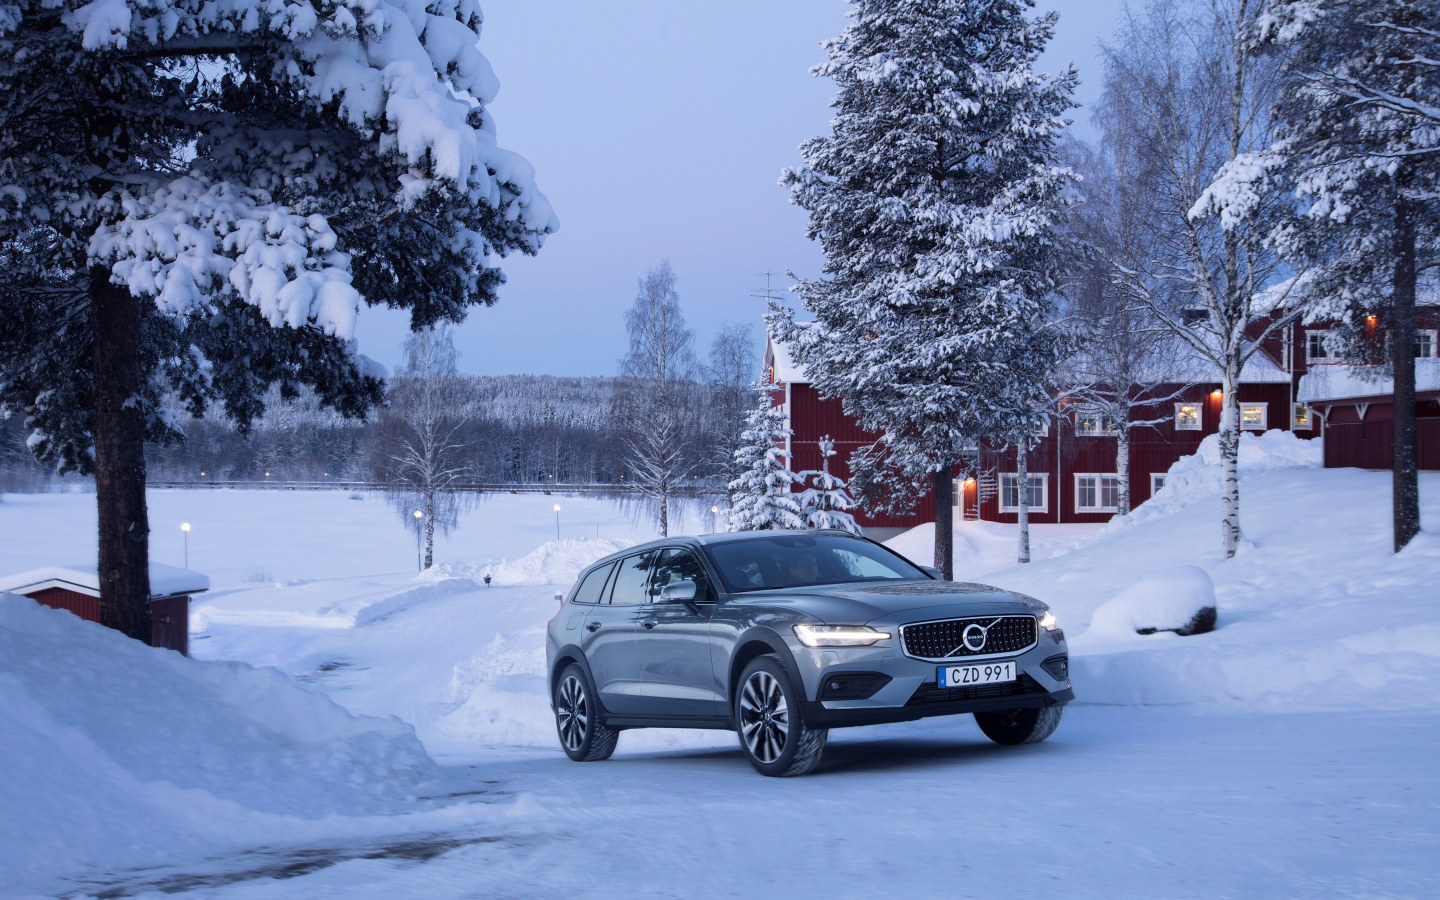 Автомобиль Volvo V60 на фоне заснеженных деревьев 